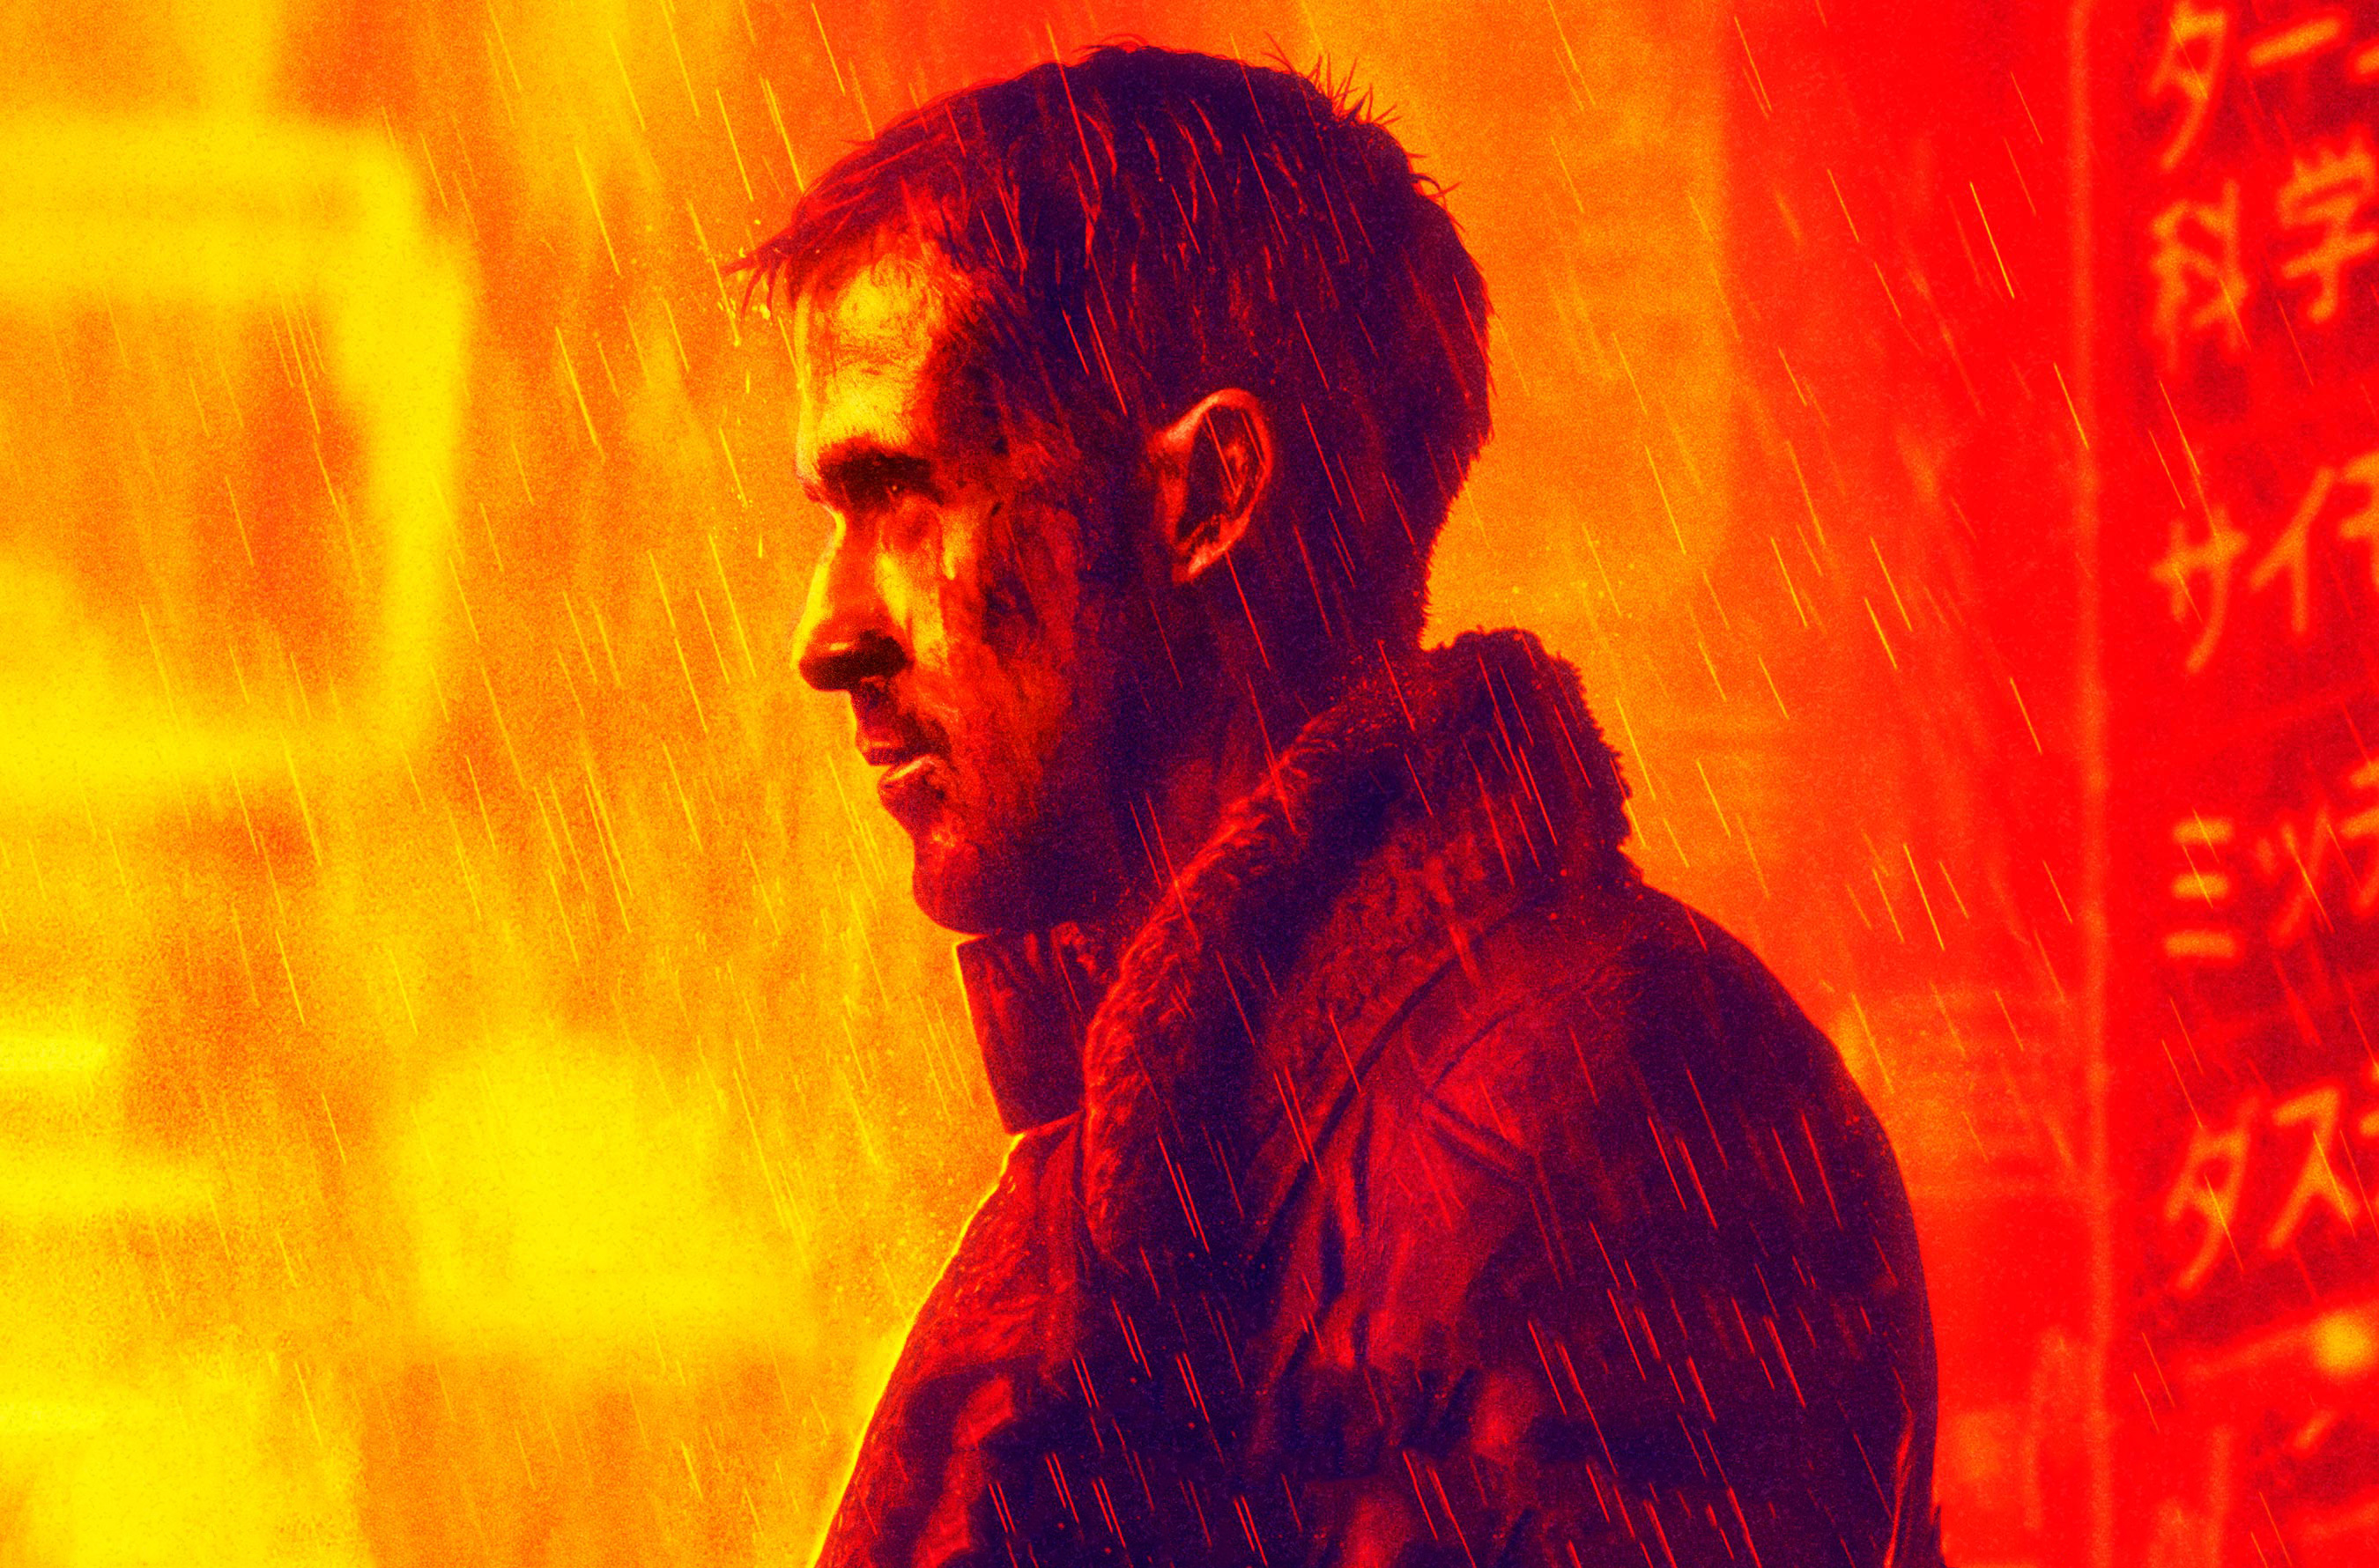 2160x468020 Ryan Gosling Blade Runner 2049 2160x468020 Resolution Wallpaper Hd Movies 4k 